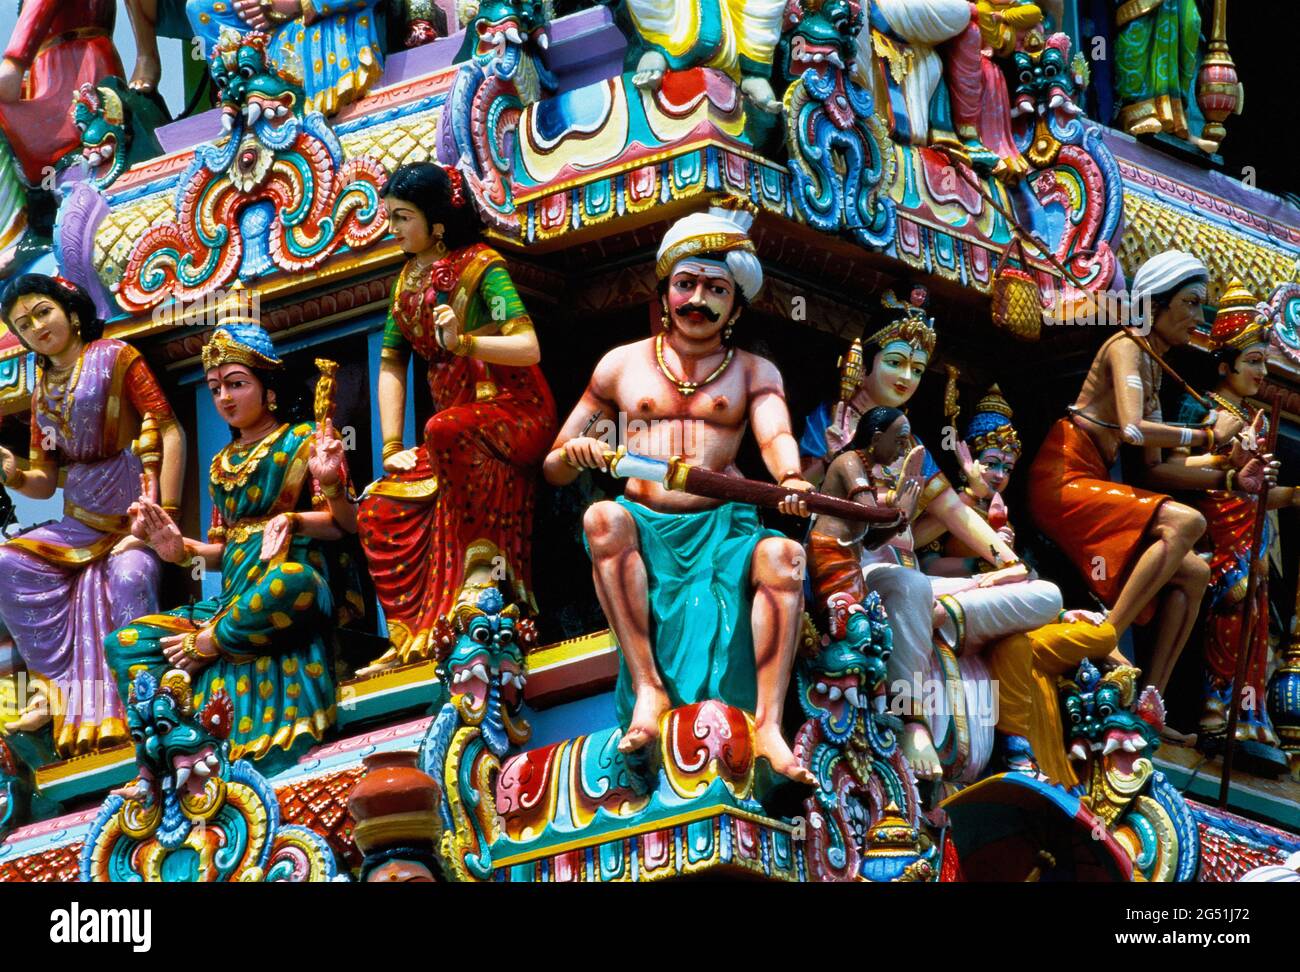 Colorful statues and architecture of Sri Mariamman Temple, Singapore Stock Photo